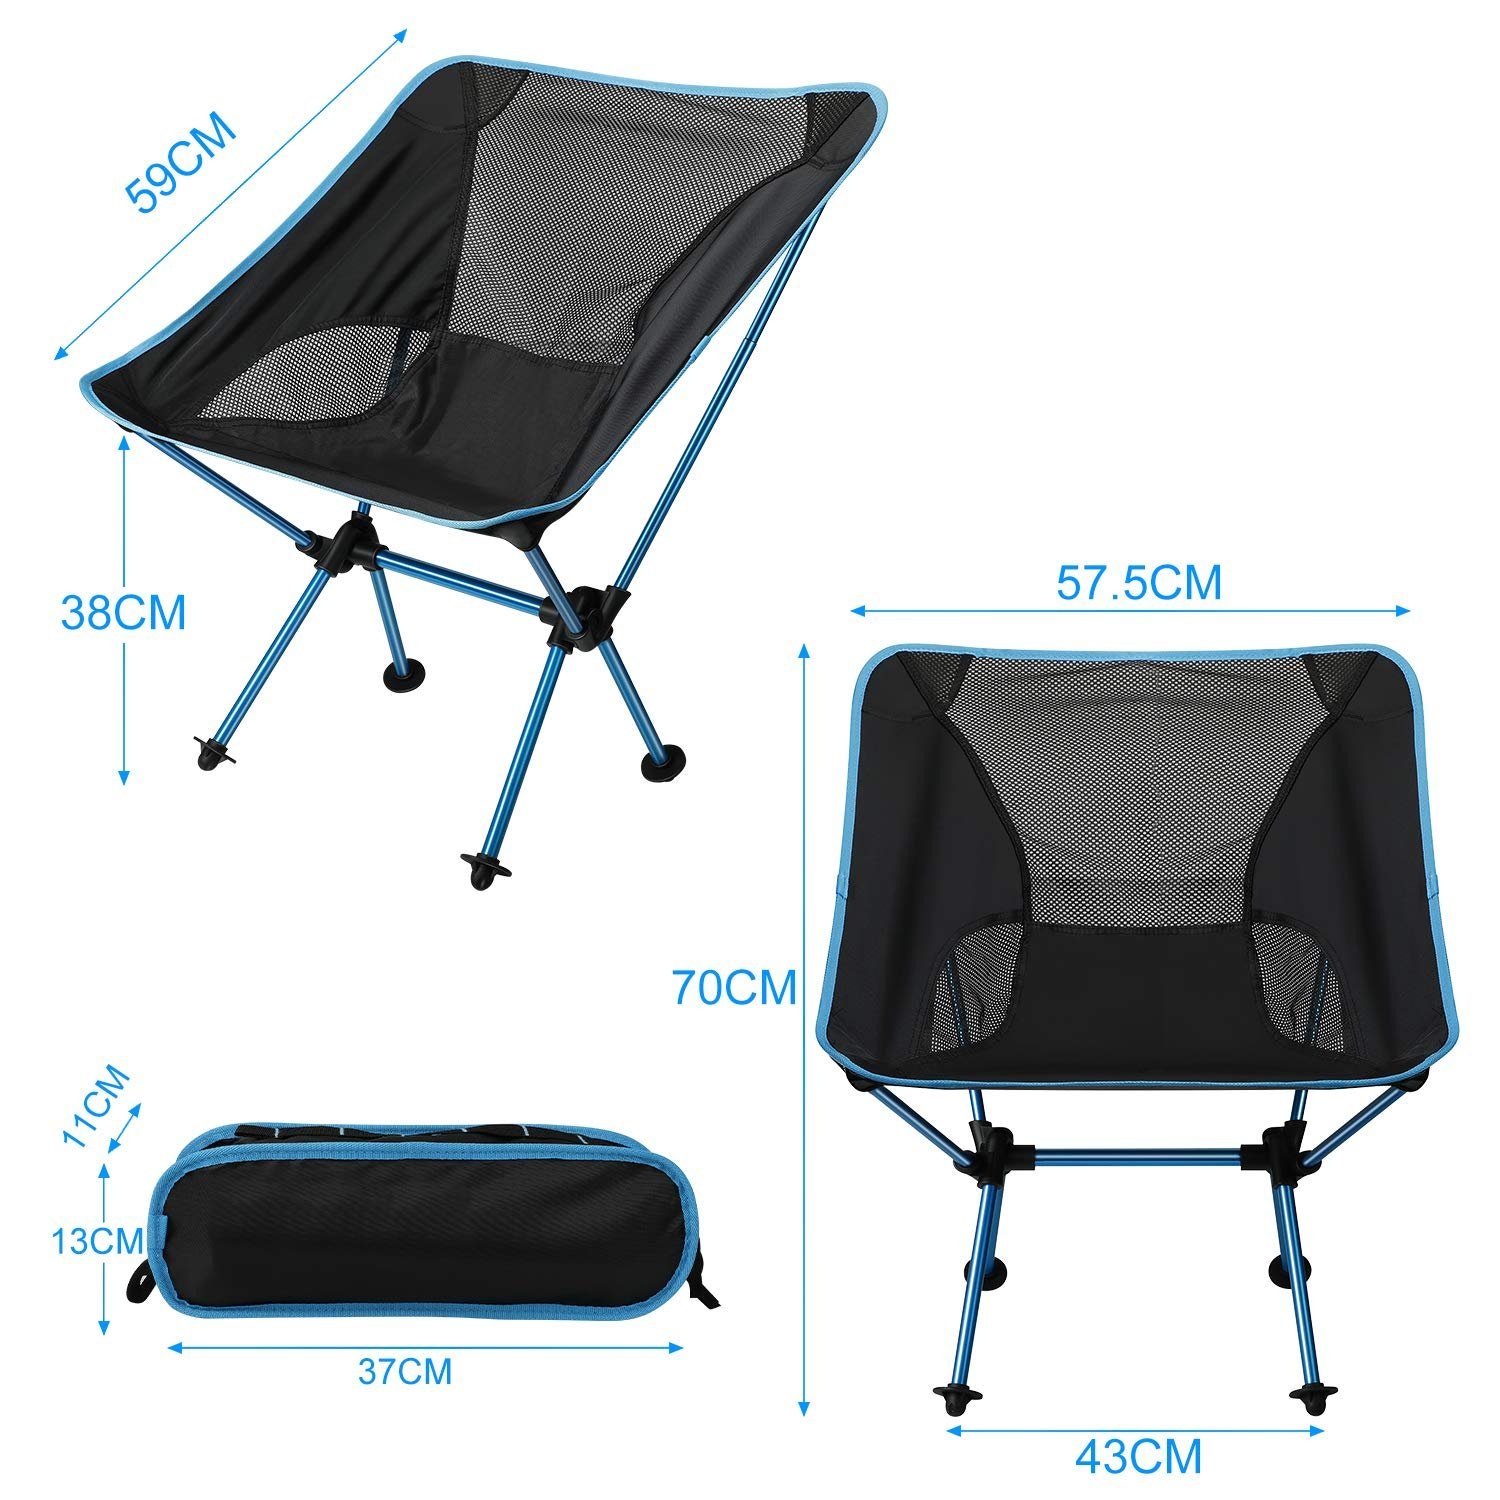 max beträgt Campingstuhl Tragbar Belastung Campingstuhl (kompakter Anglerstuhl EXTSUD Klappstuhl Outdoor für Aktivitäten,Camping,Grill,Picknick,Strand,Wandern 150kg) Stuhl mit Stuhl Tragetasche tragbar